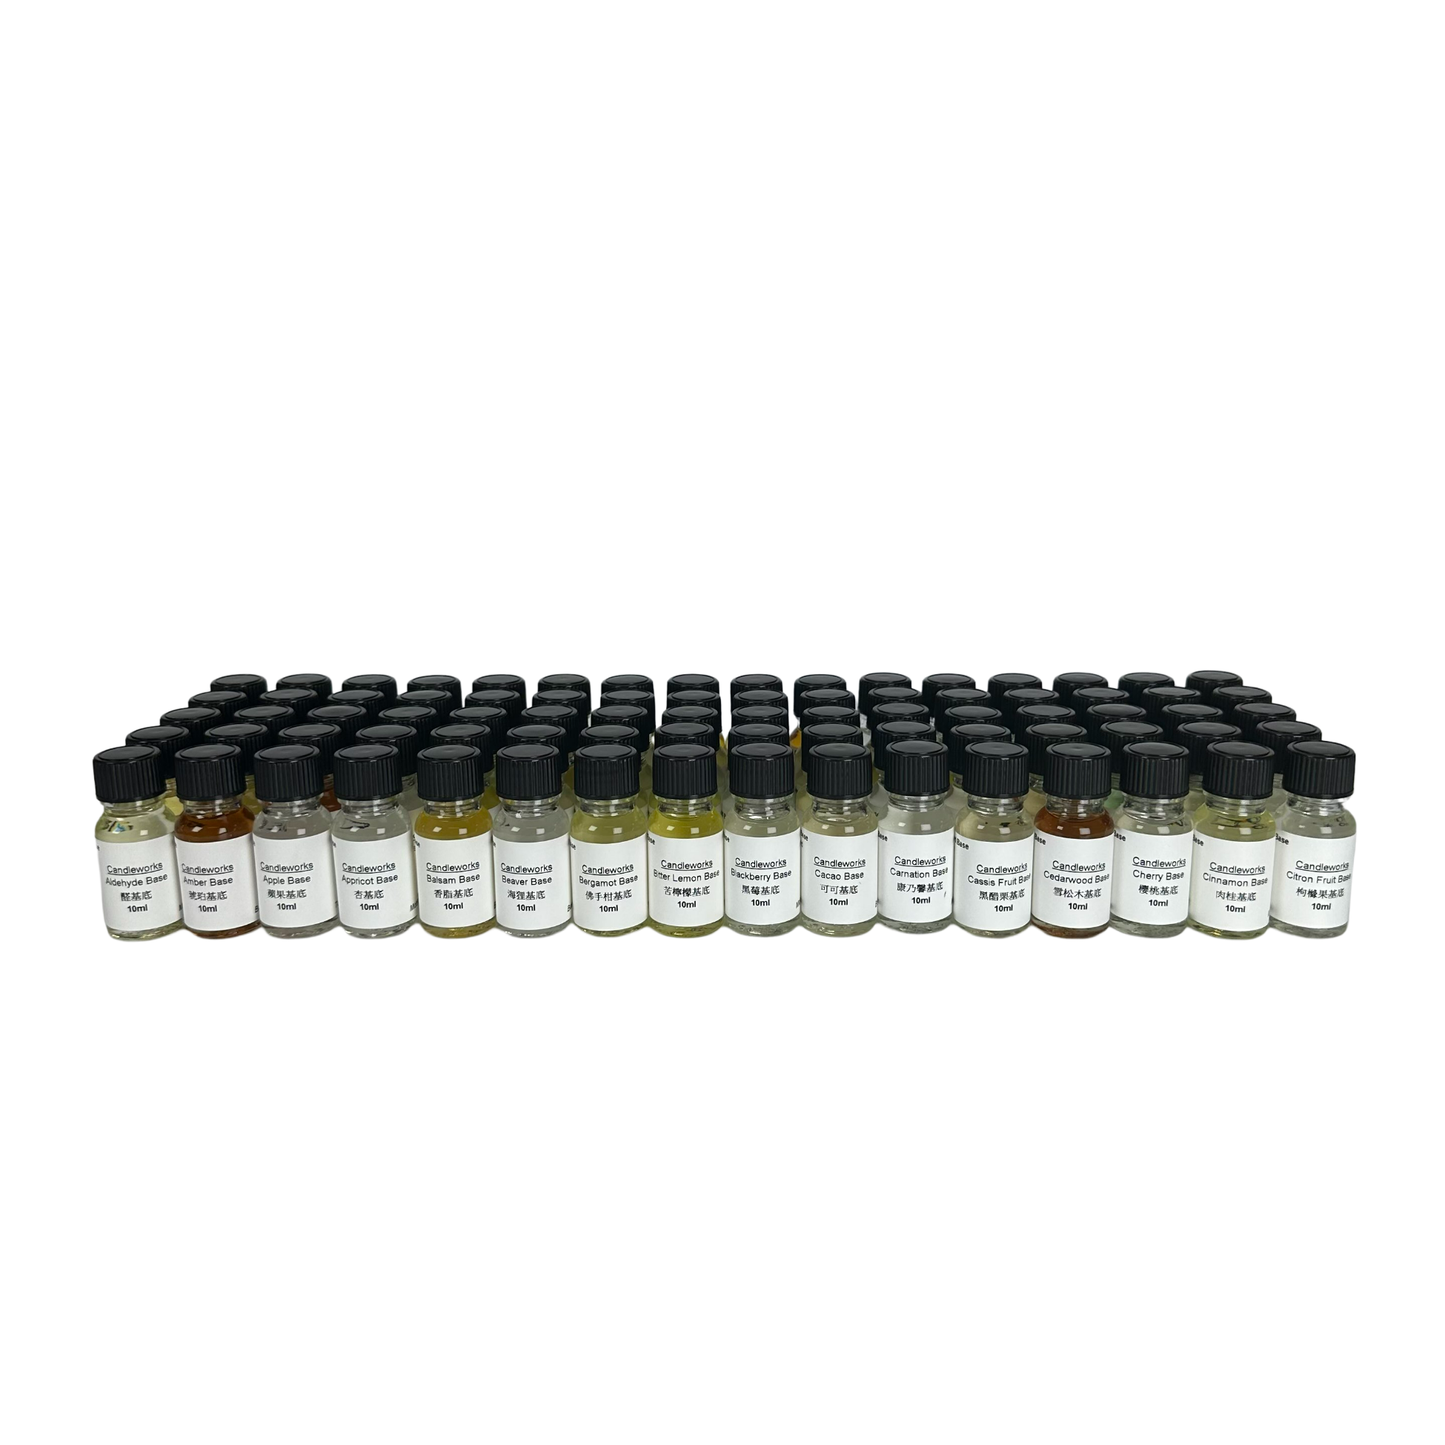 Perfume Base Blending Kit 調香基底油體驗套裝 10ml x 80 Types